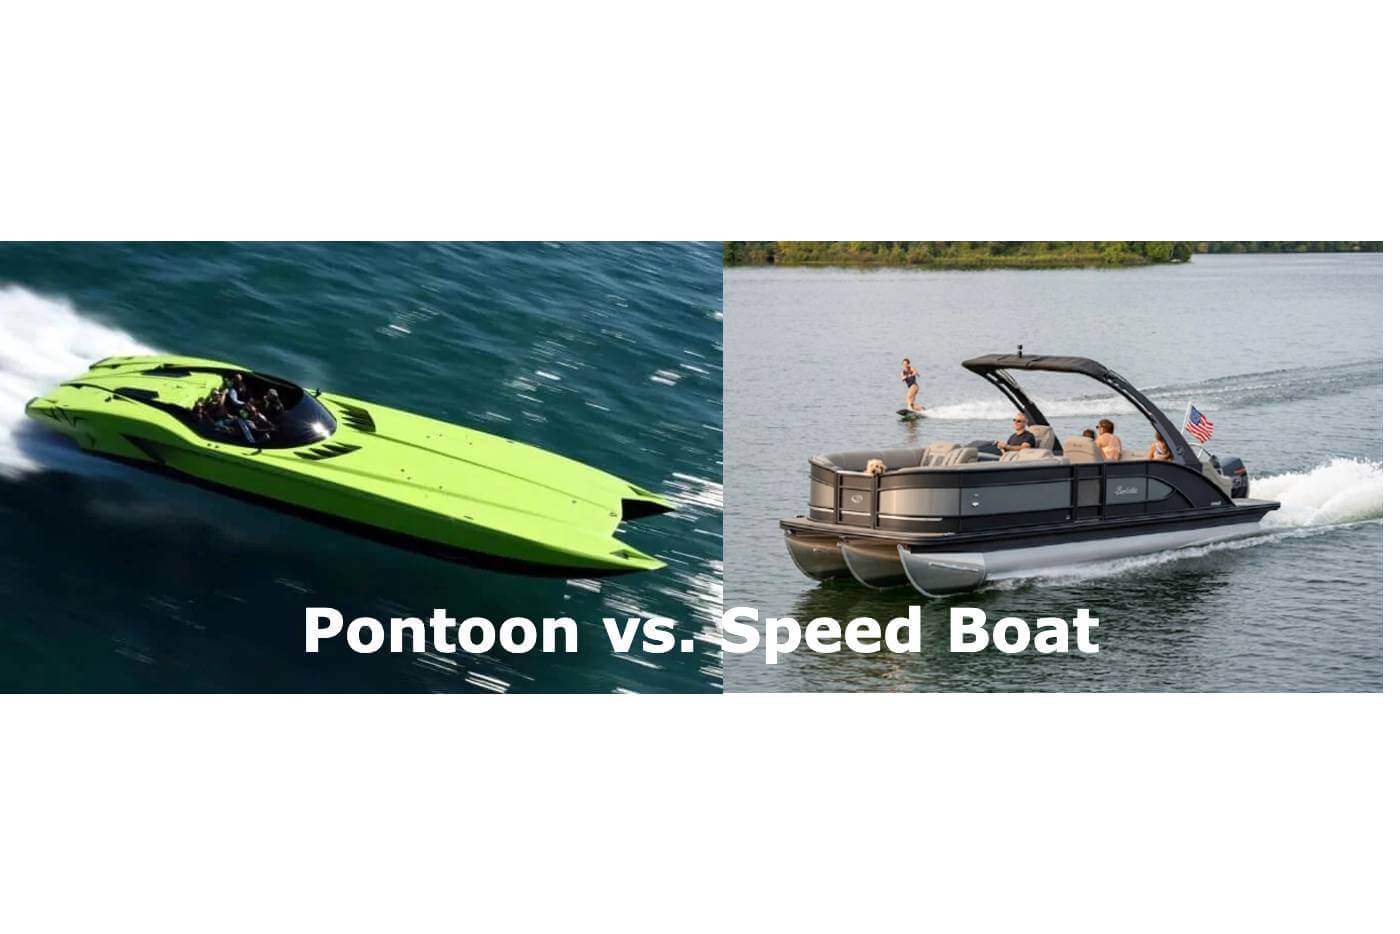 Pontoon vs. Speed Boat